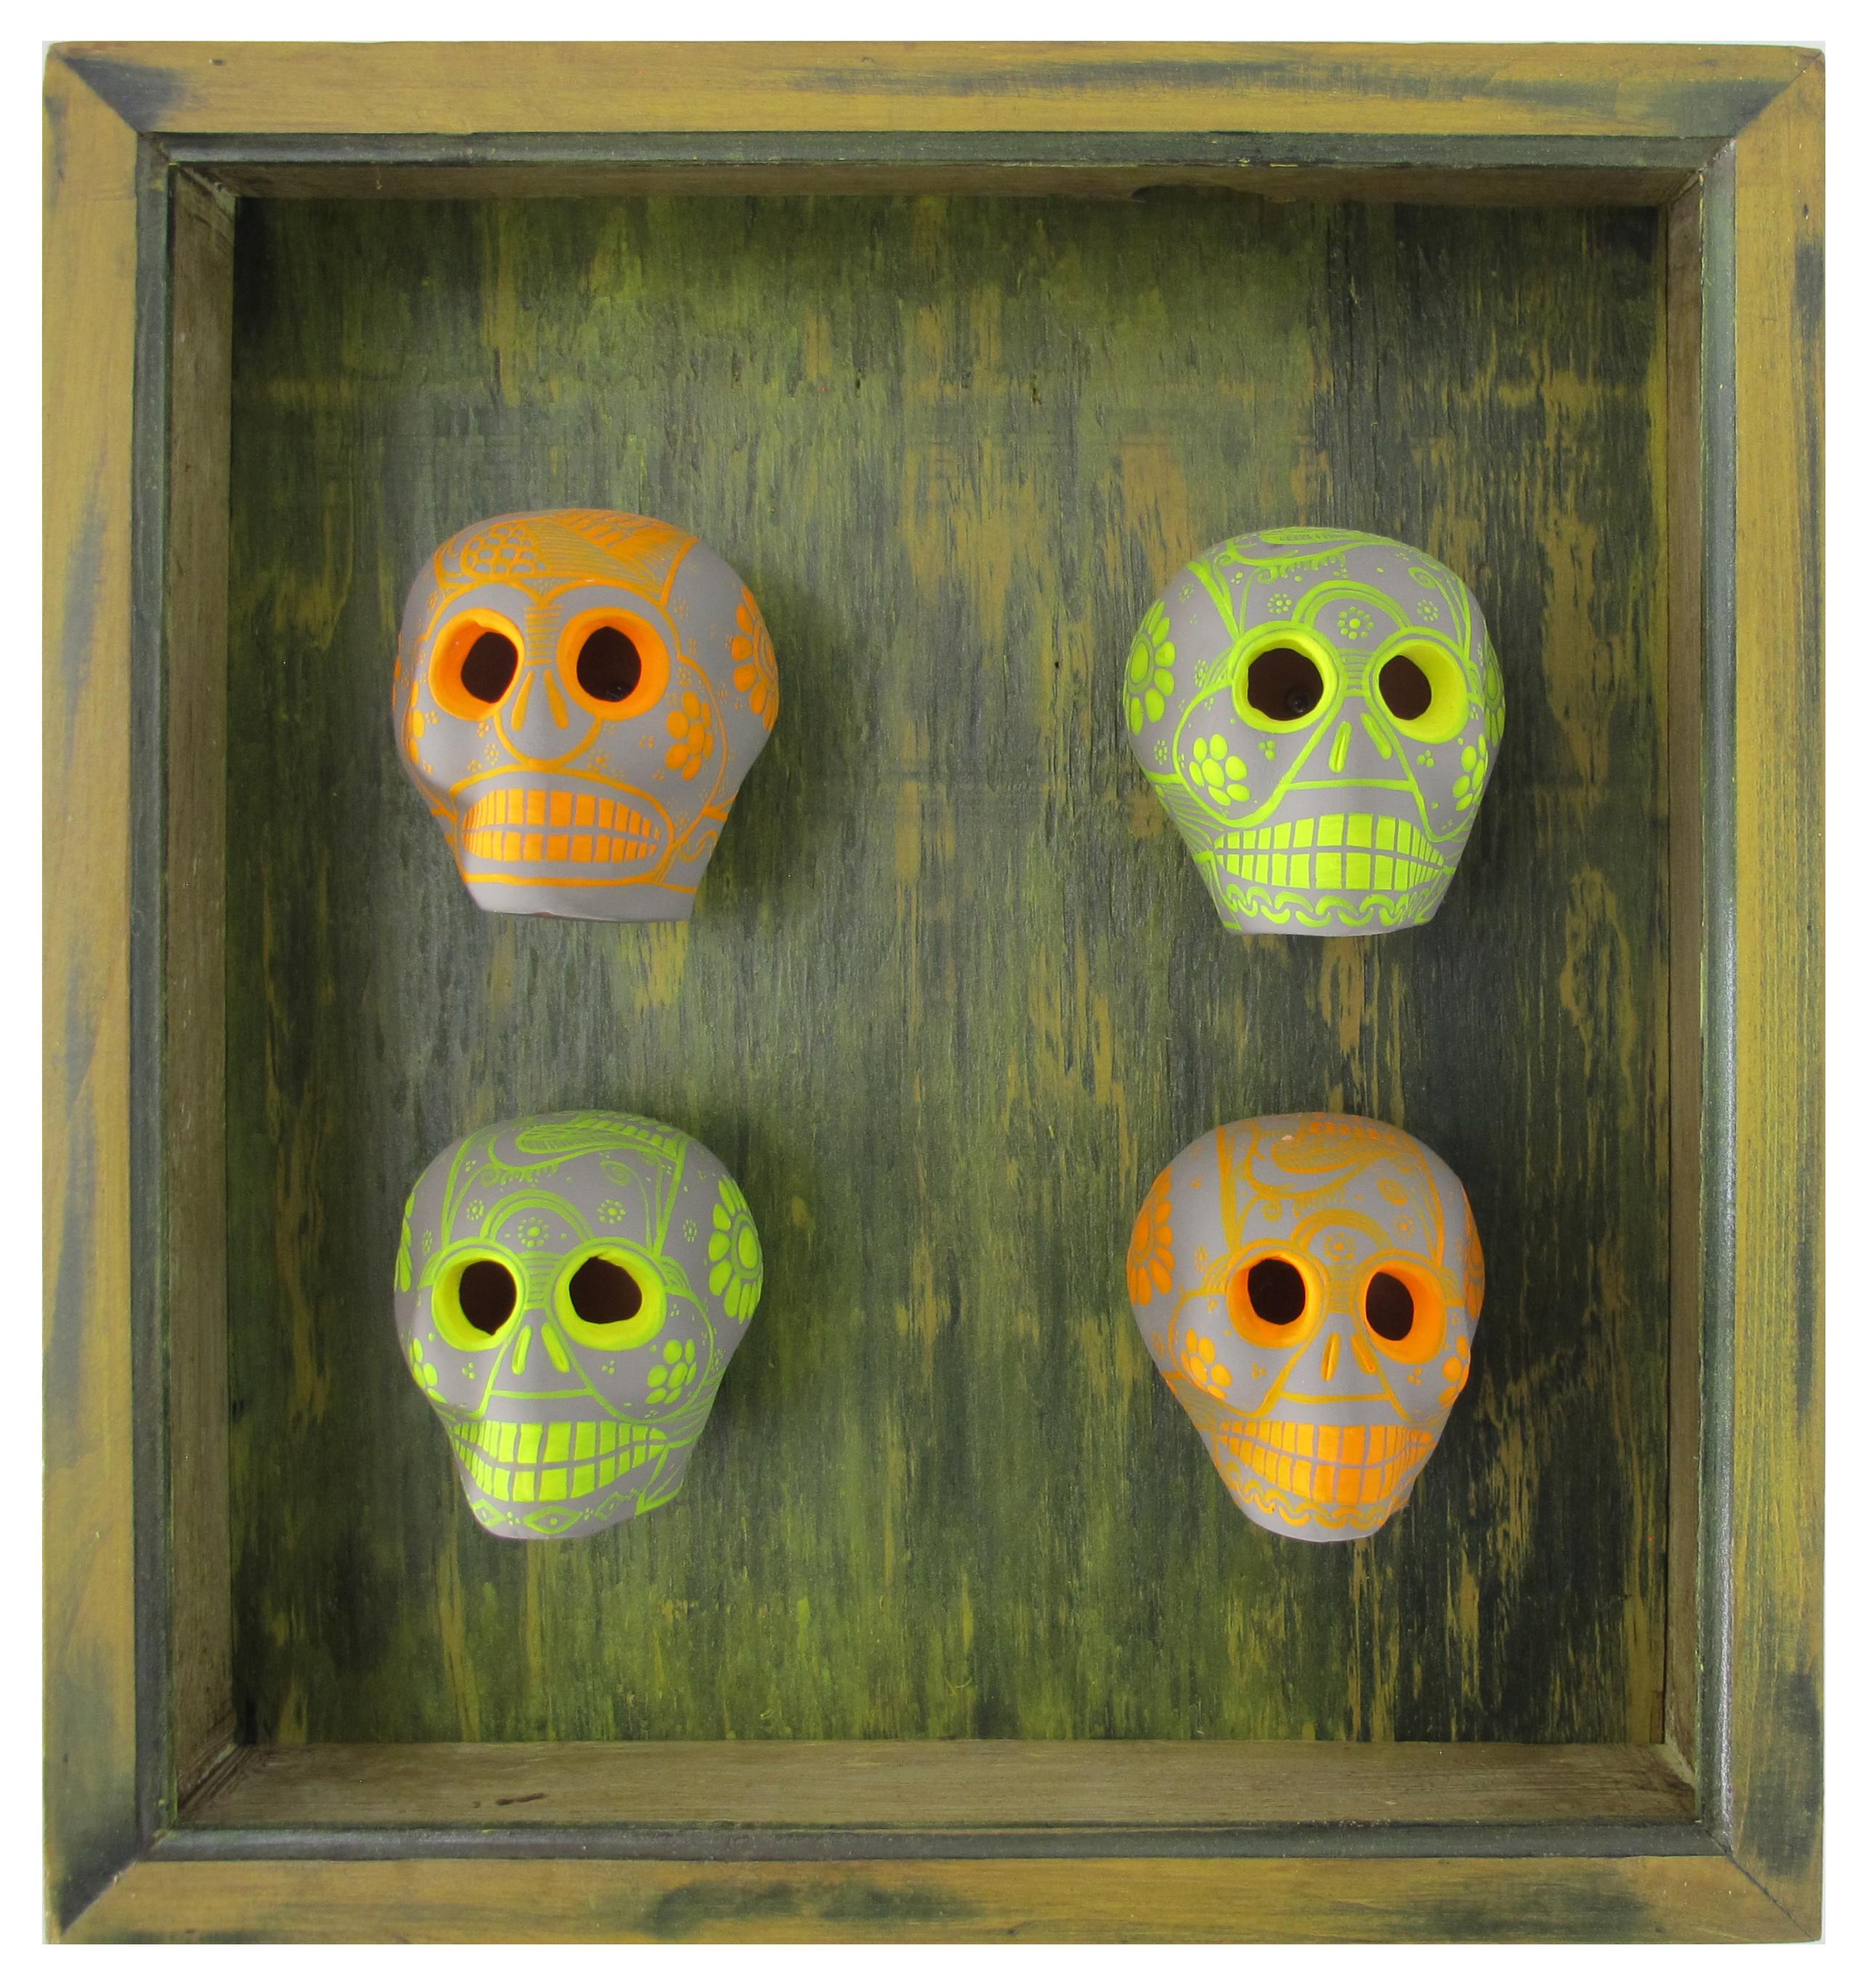 KARTEL Portrait Painting - Dia de los Muertos - handmade and painted ceramic skulls with custom frame